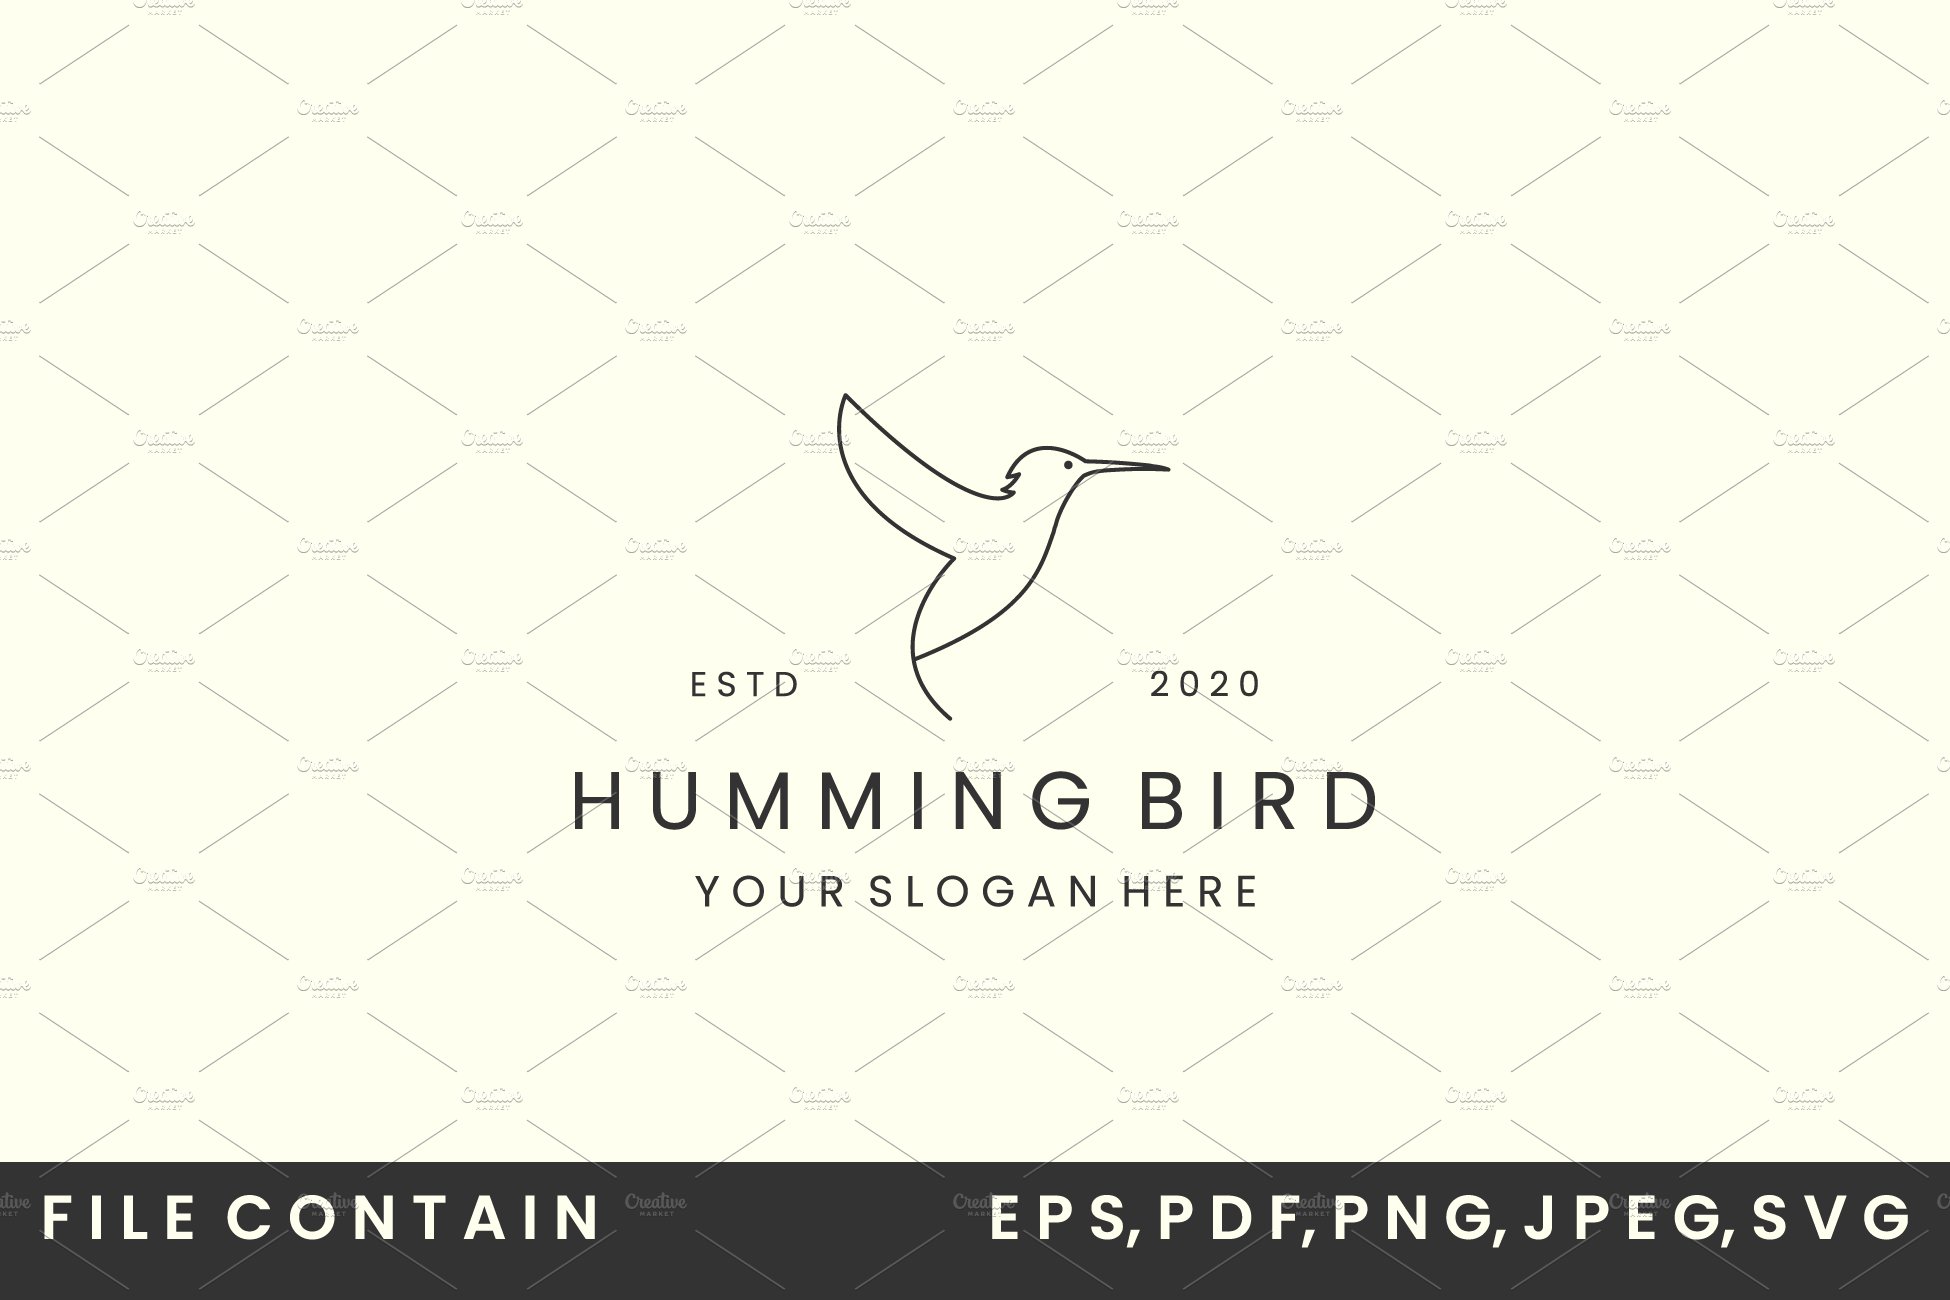 linear humming bird logo vector cover image.